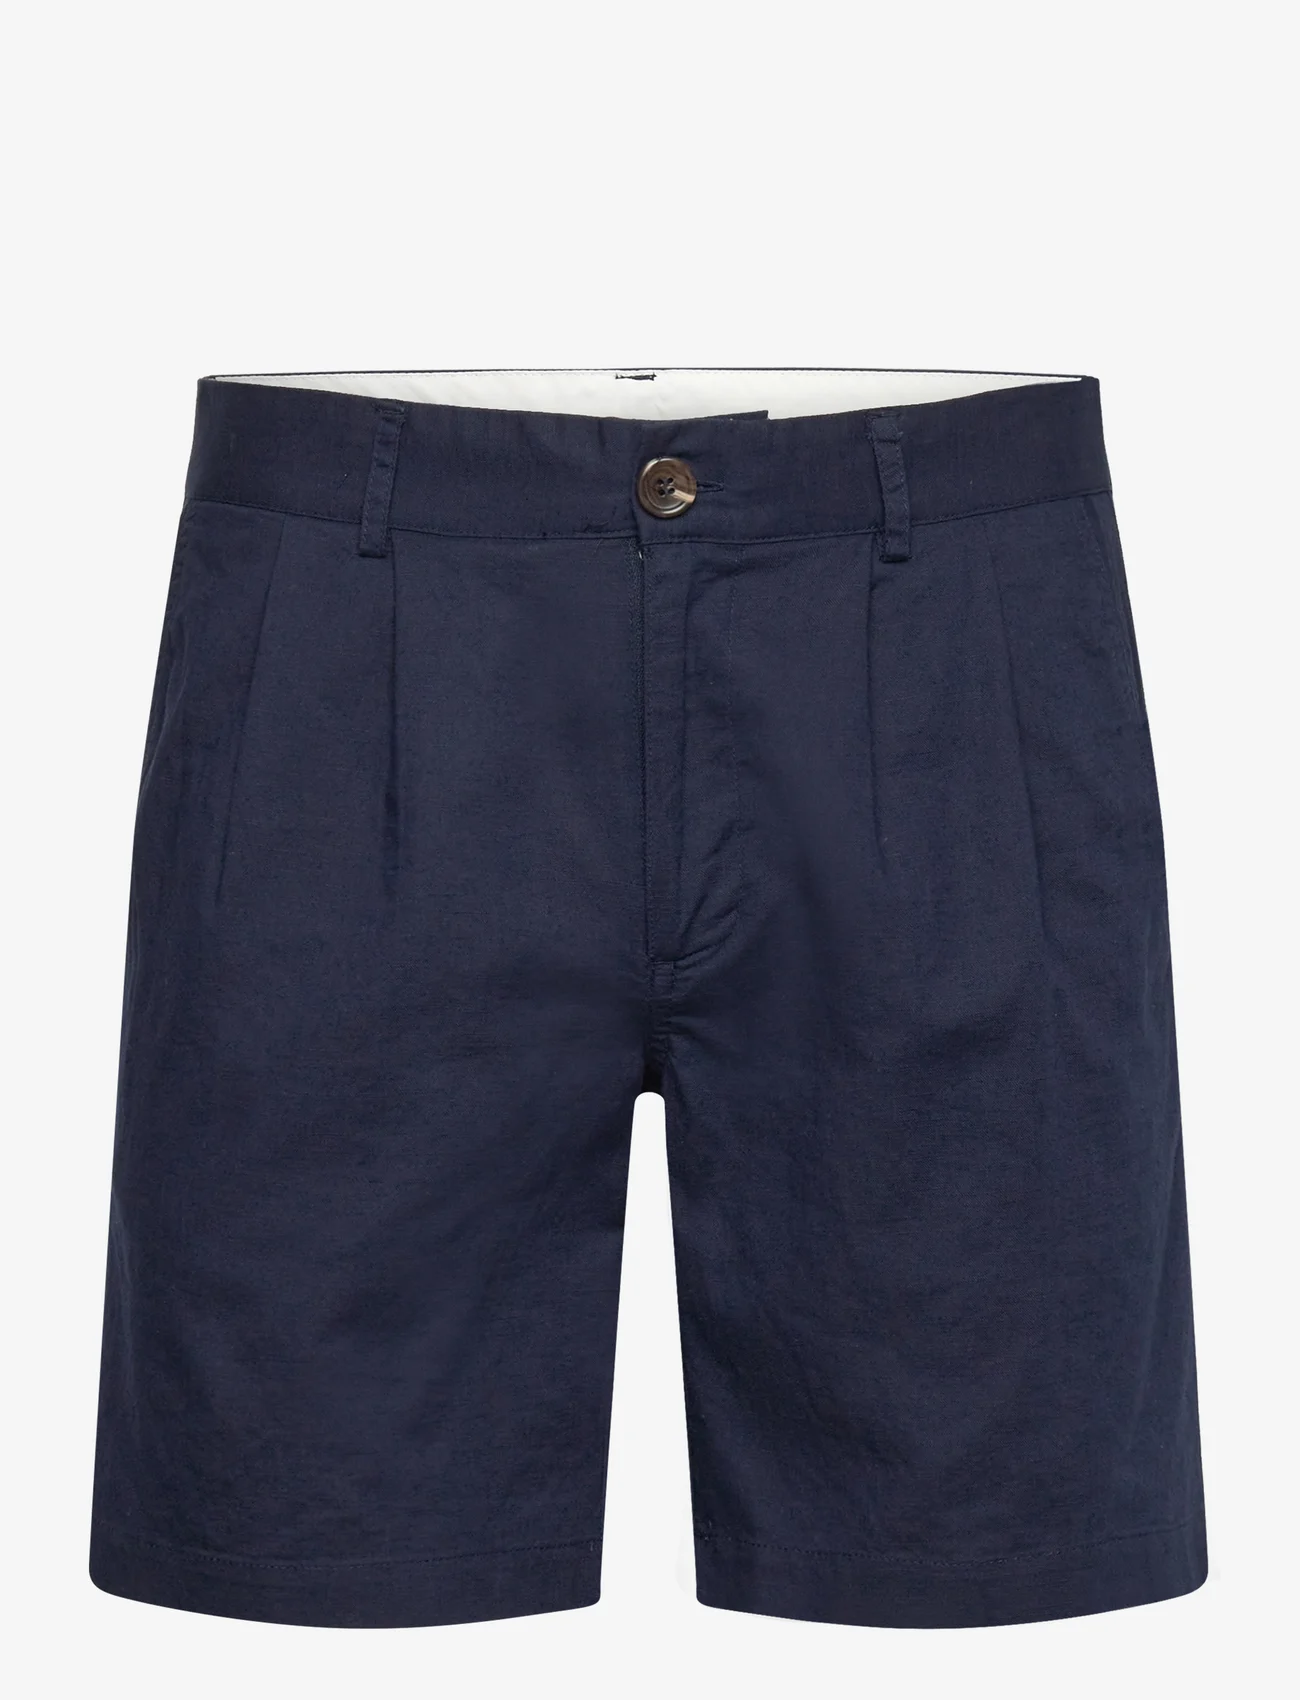 Bruuns Bazaar - LinowBBGermain shorts - linnen shorts - navy blazer - 0